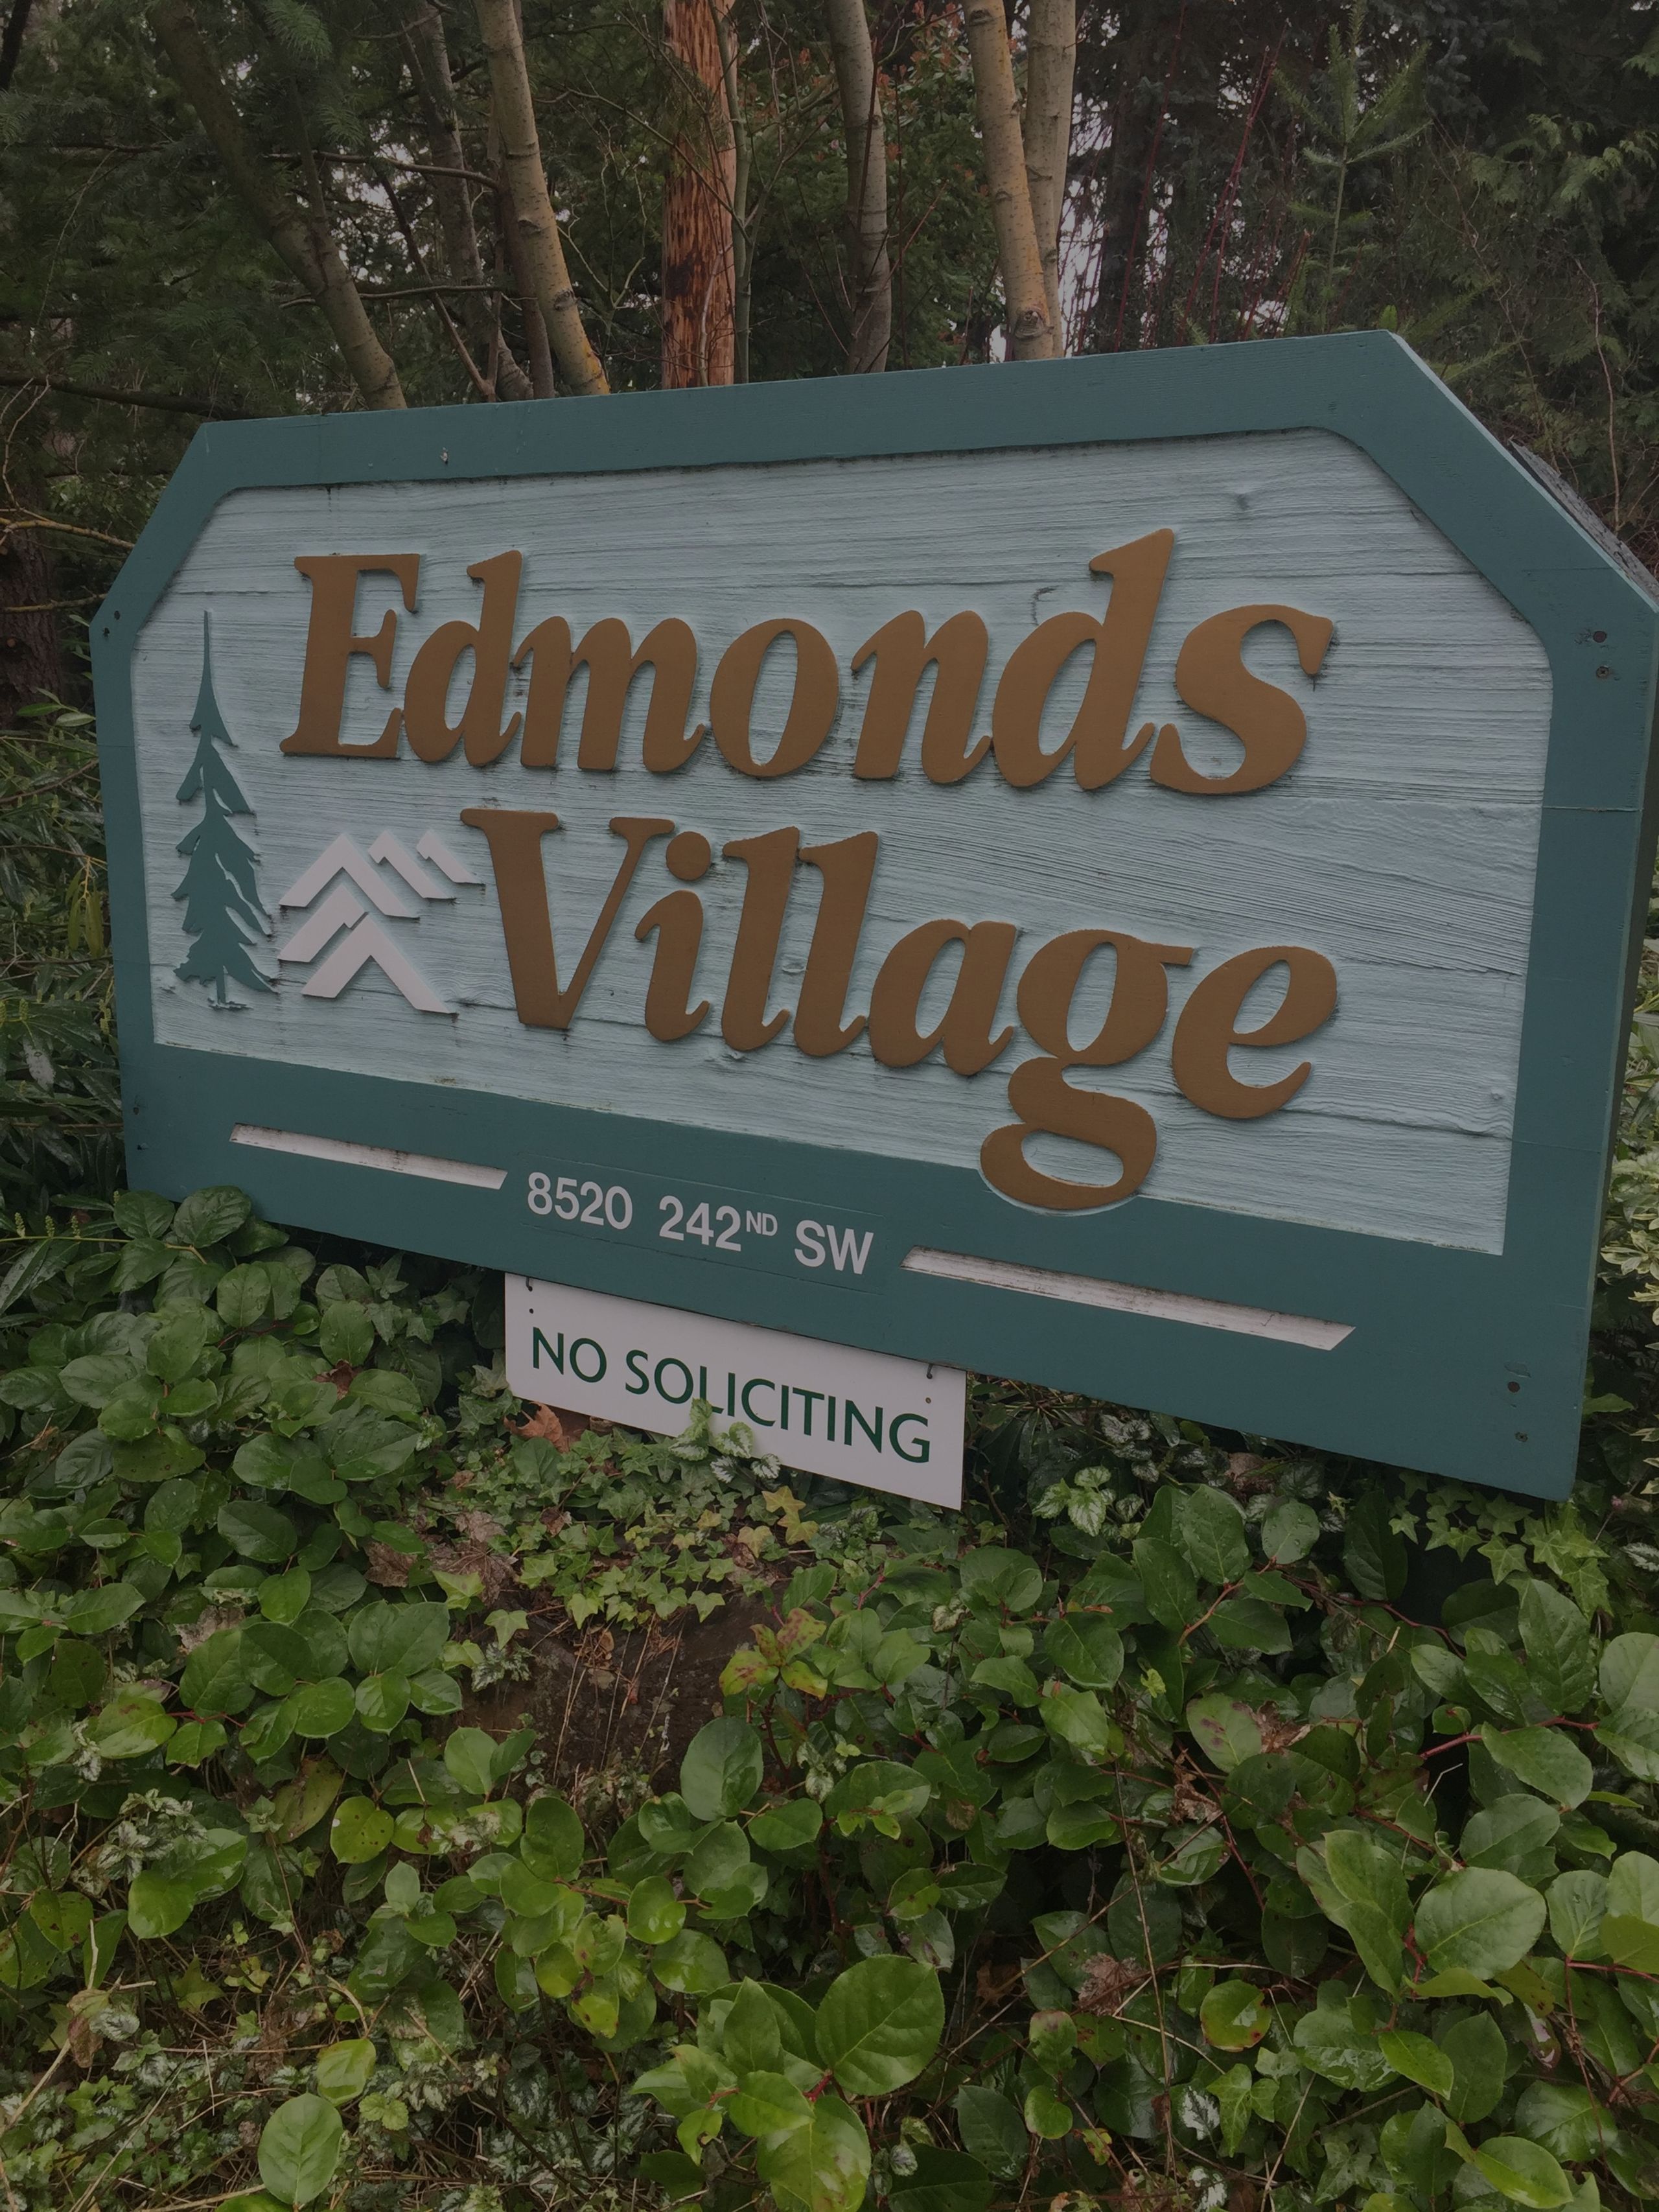 Edmonds Village Condominiums 8620 242nd Street SW, Edmonds WA